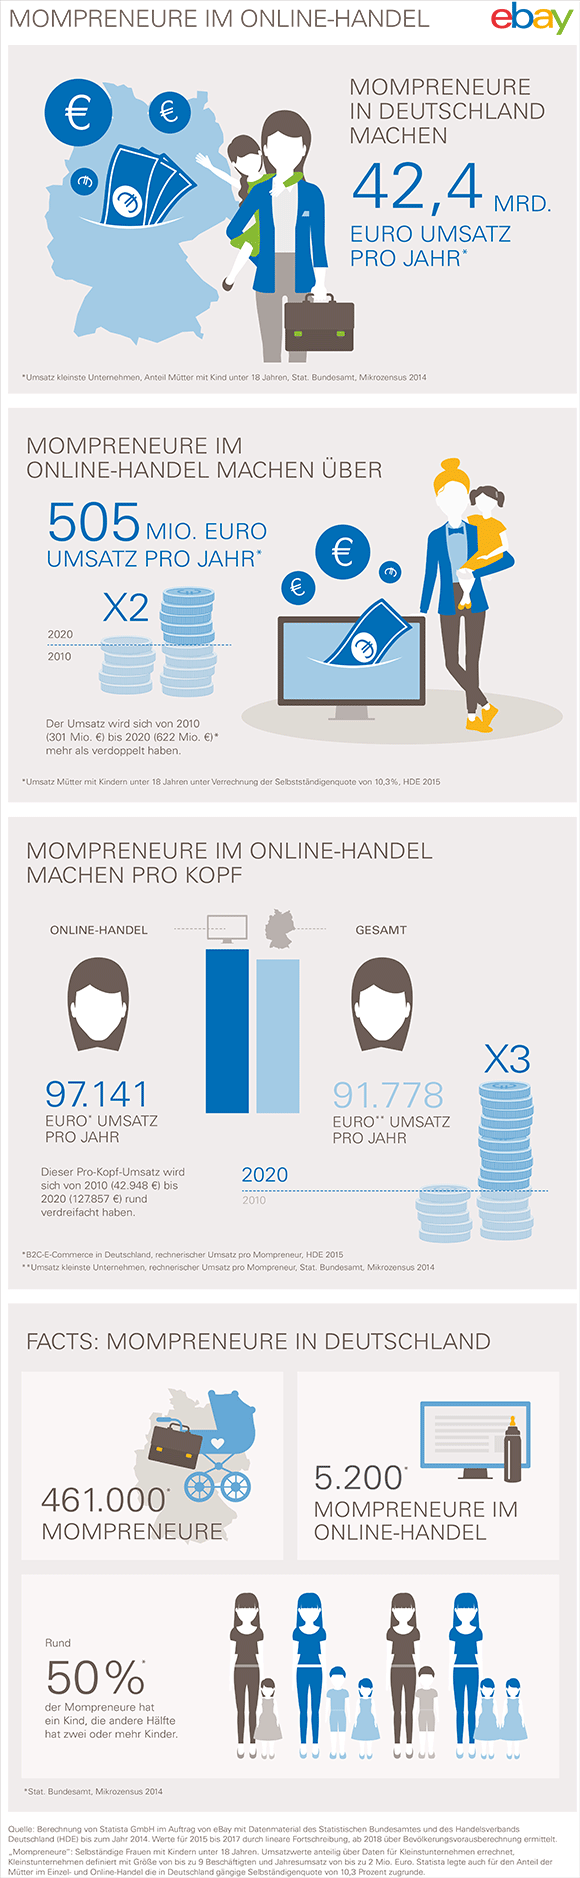 1eBay_Mompreneure-im-Online-Handel_Infografik-sm